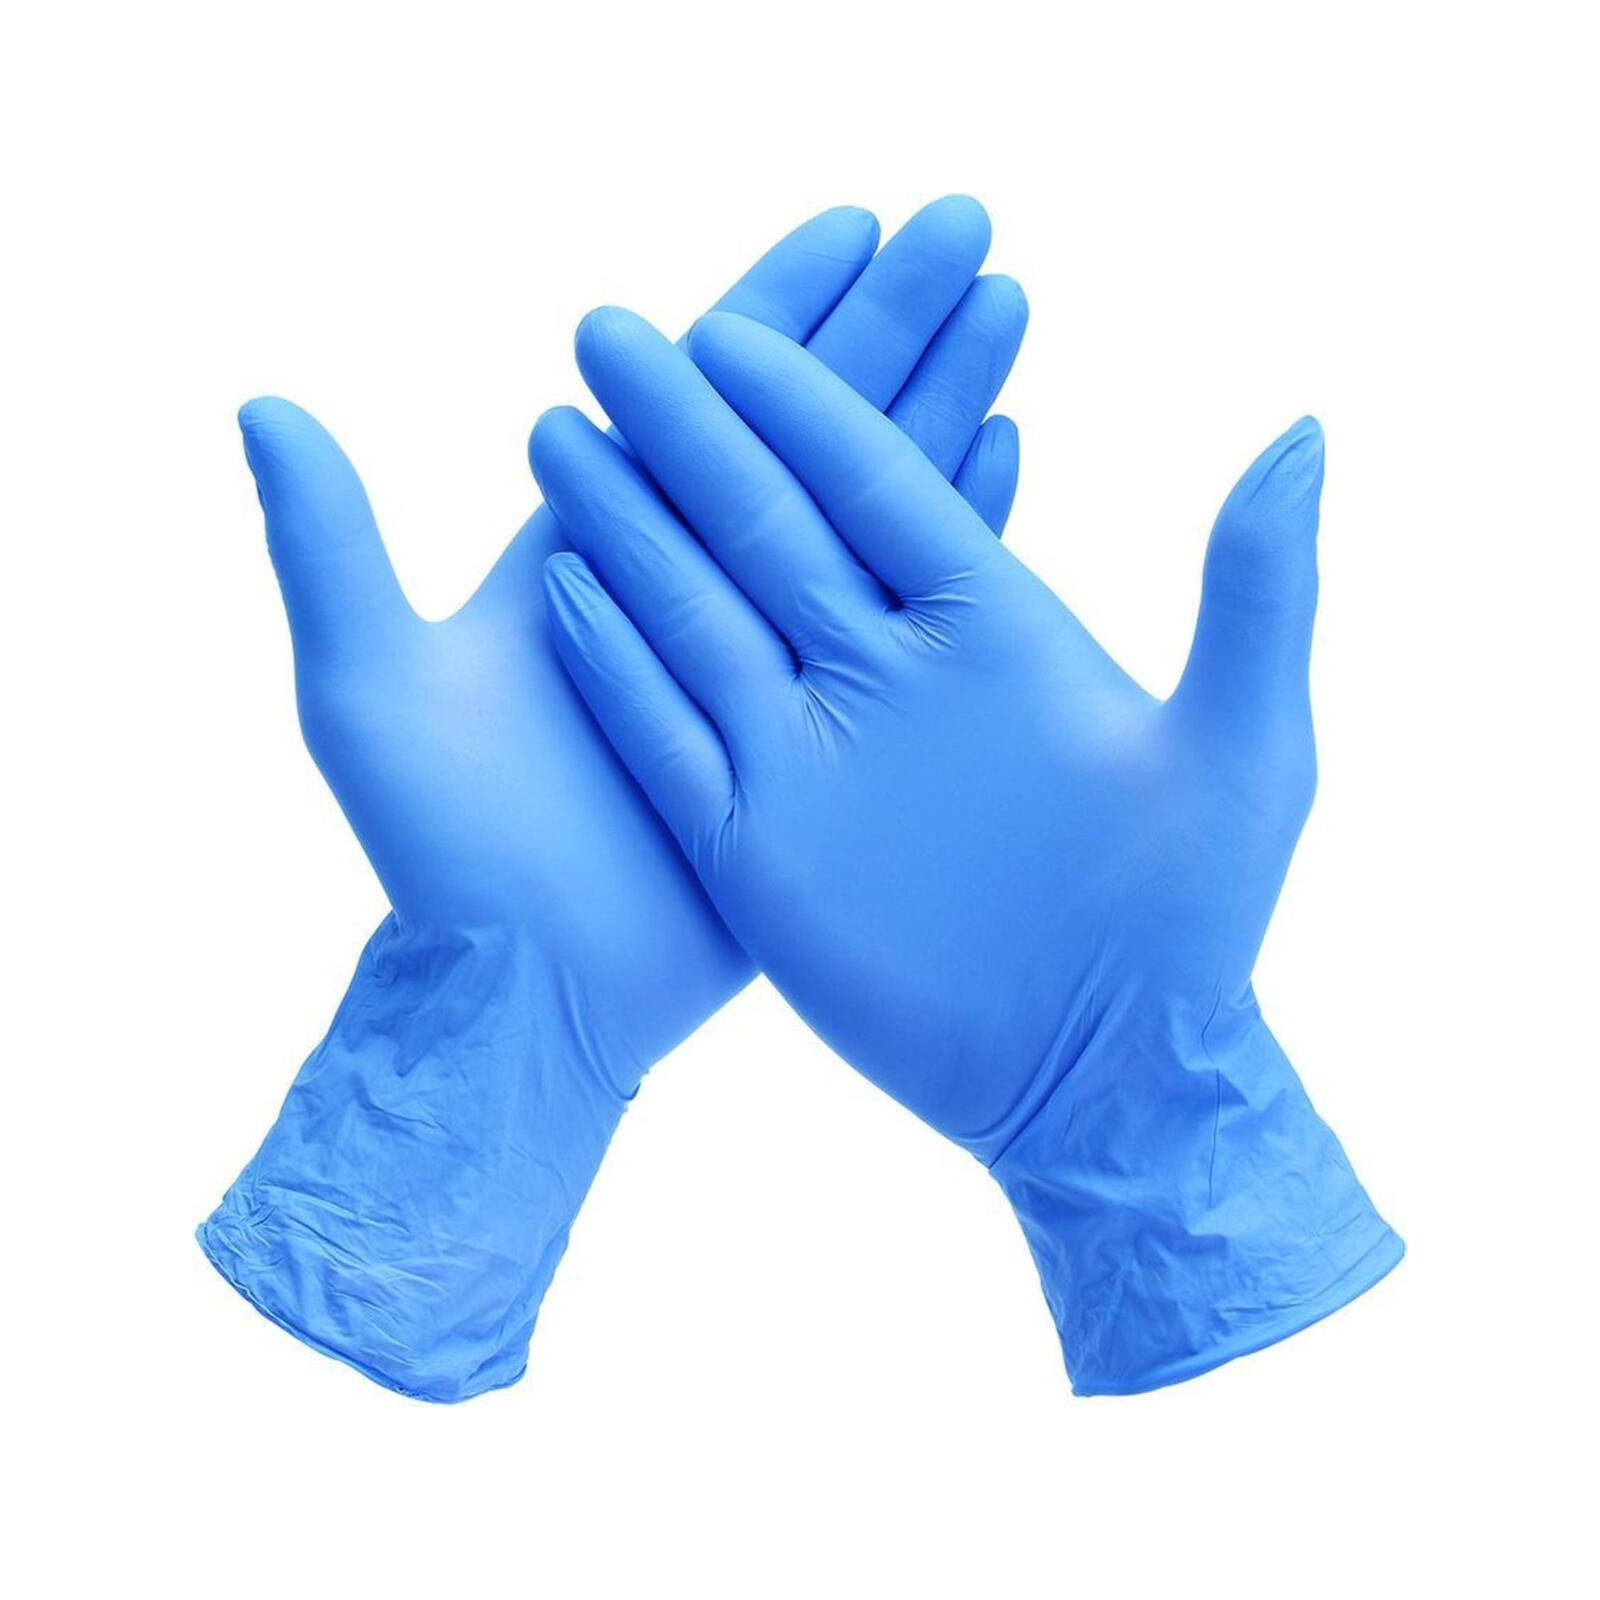 Medical examination gloves | Protextra™ Standard Nitrile | Powder-free